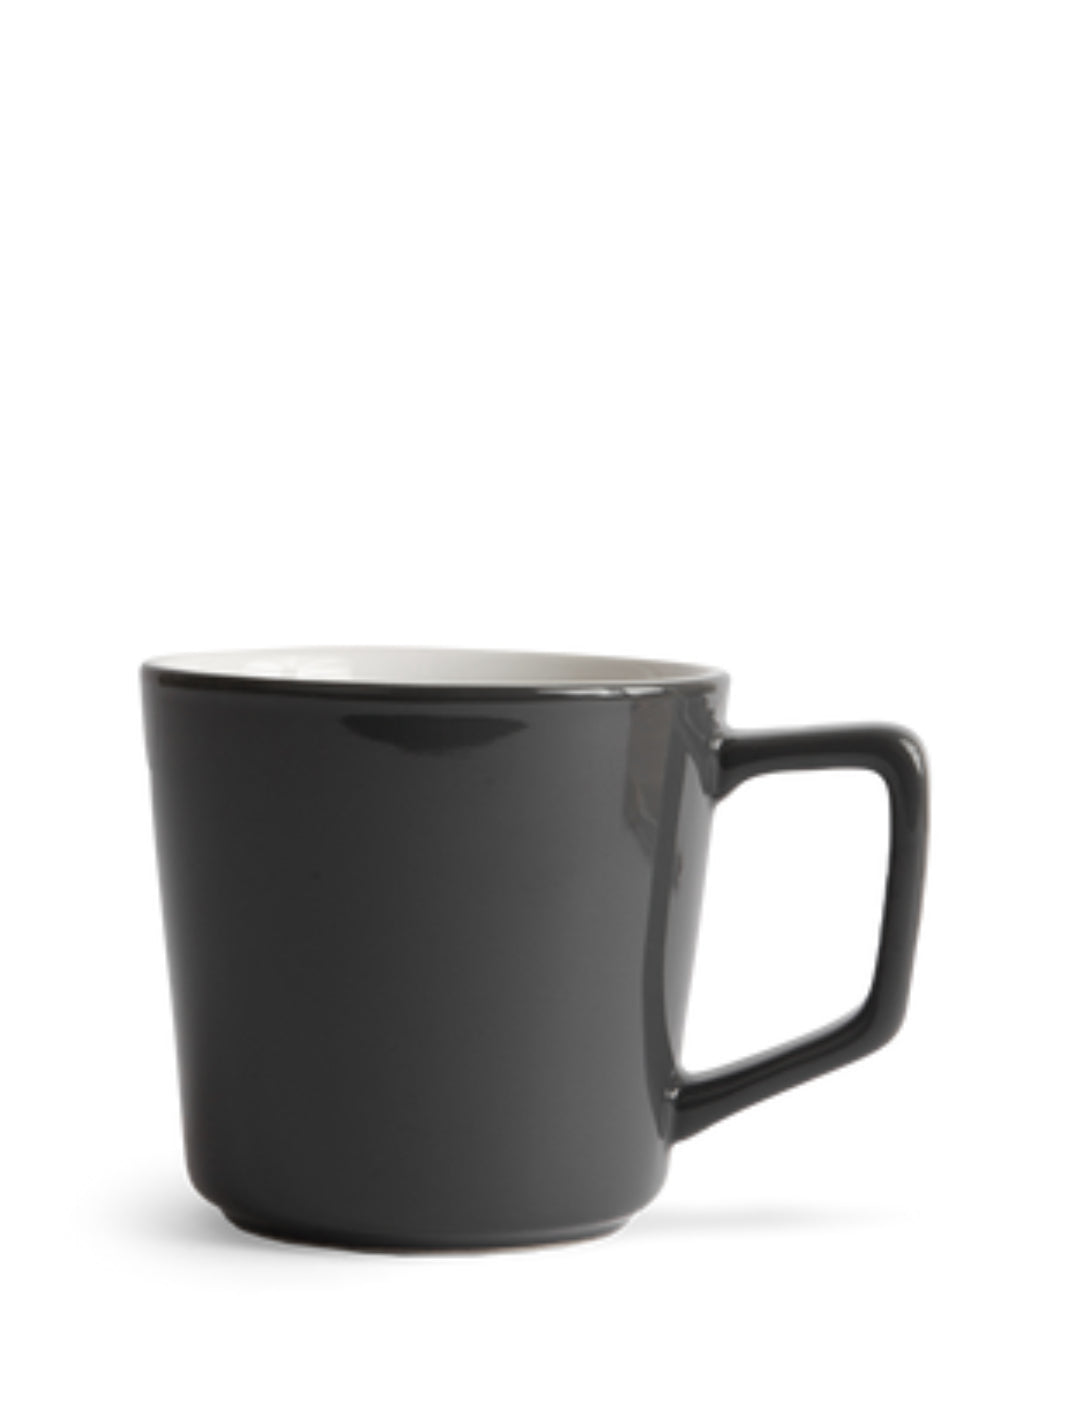 CREATED CO. Angle Drip Mug (12oz/355ml) (6-Pack)